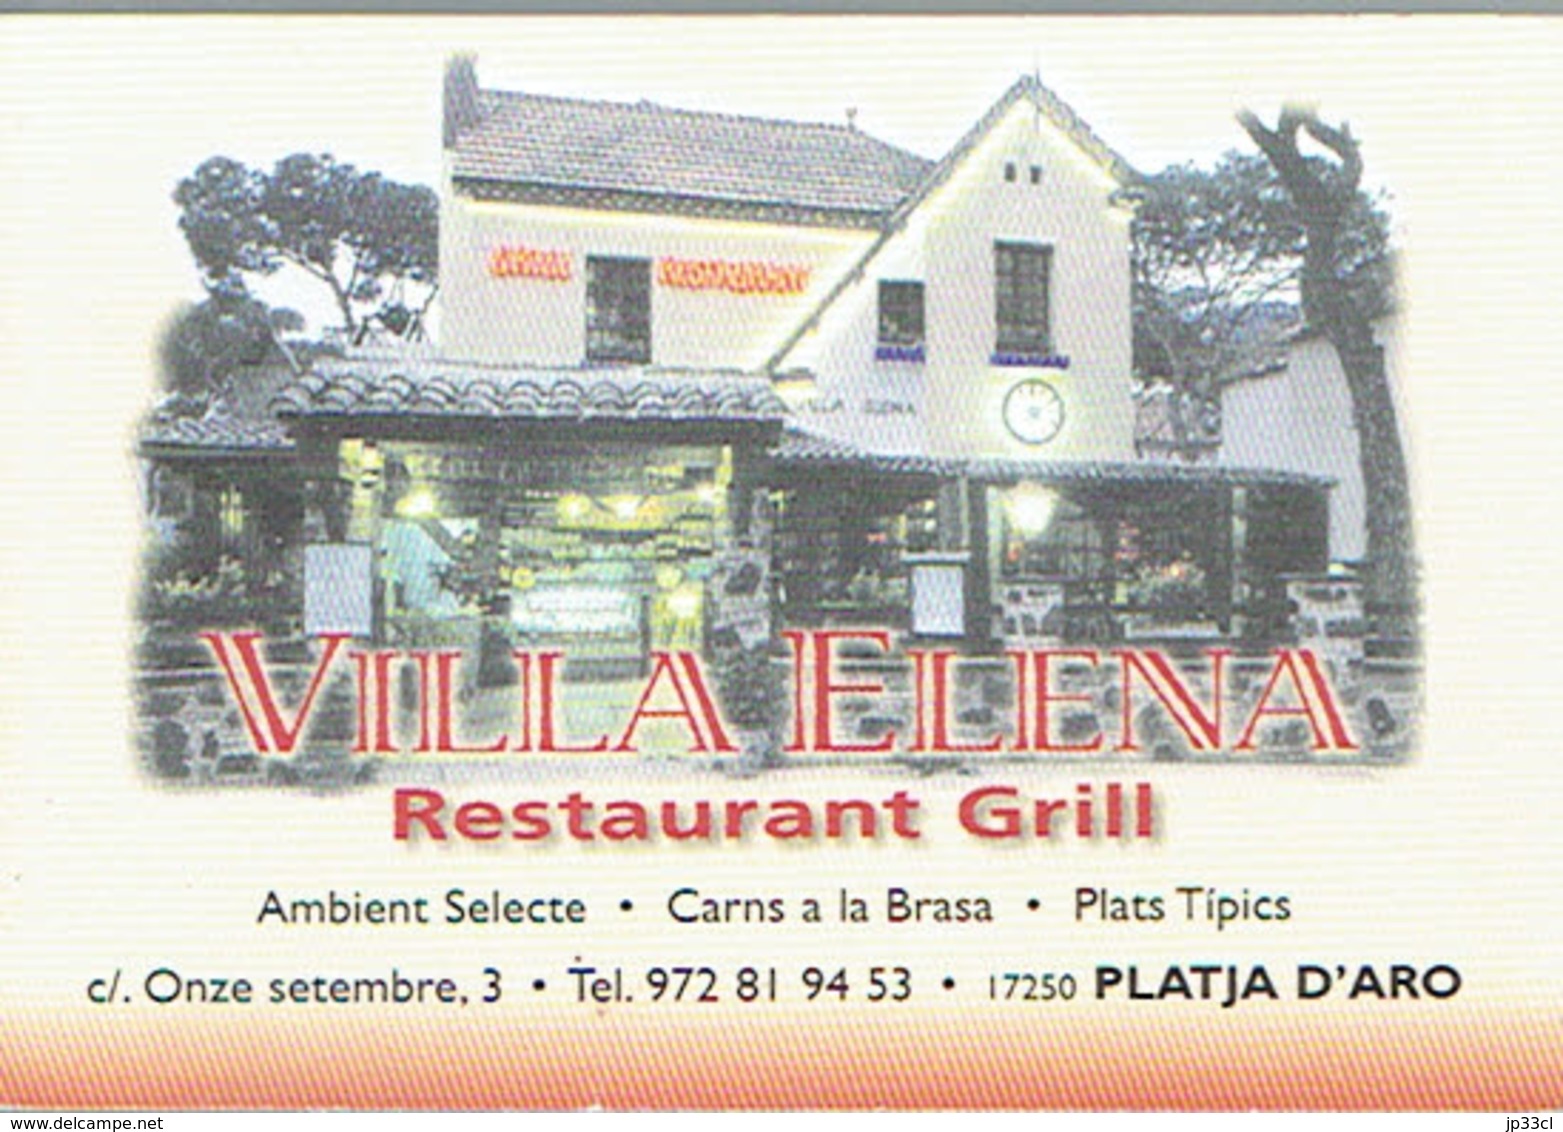 Carte De Visite Du Restaurant Grill Villa Elena, Playa De Aro (Espagne) Vers 1999/2000 - Cartes De Visite